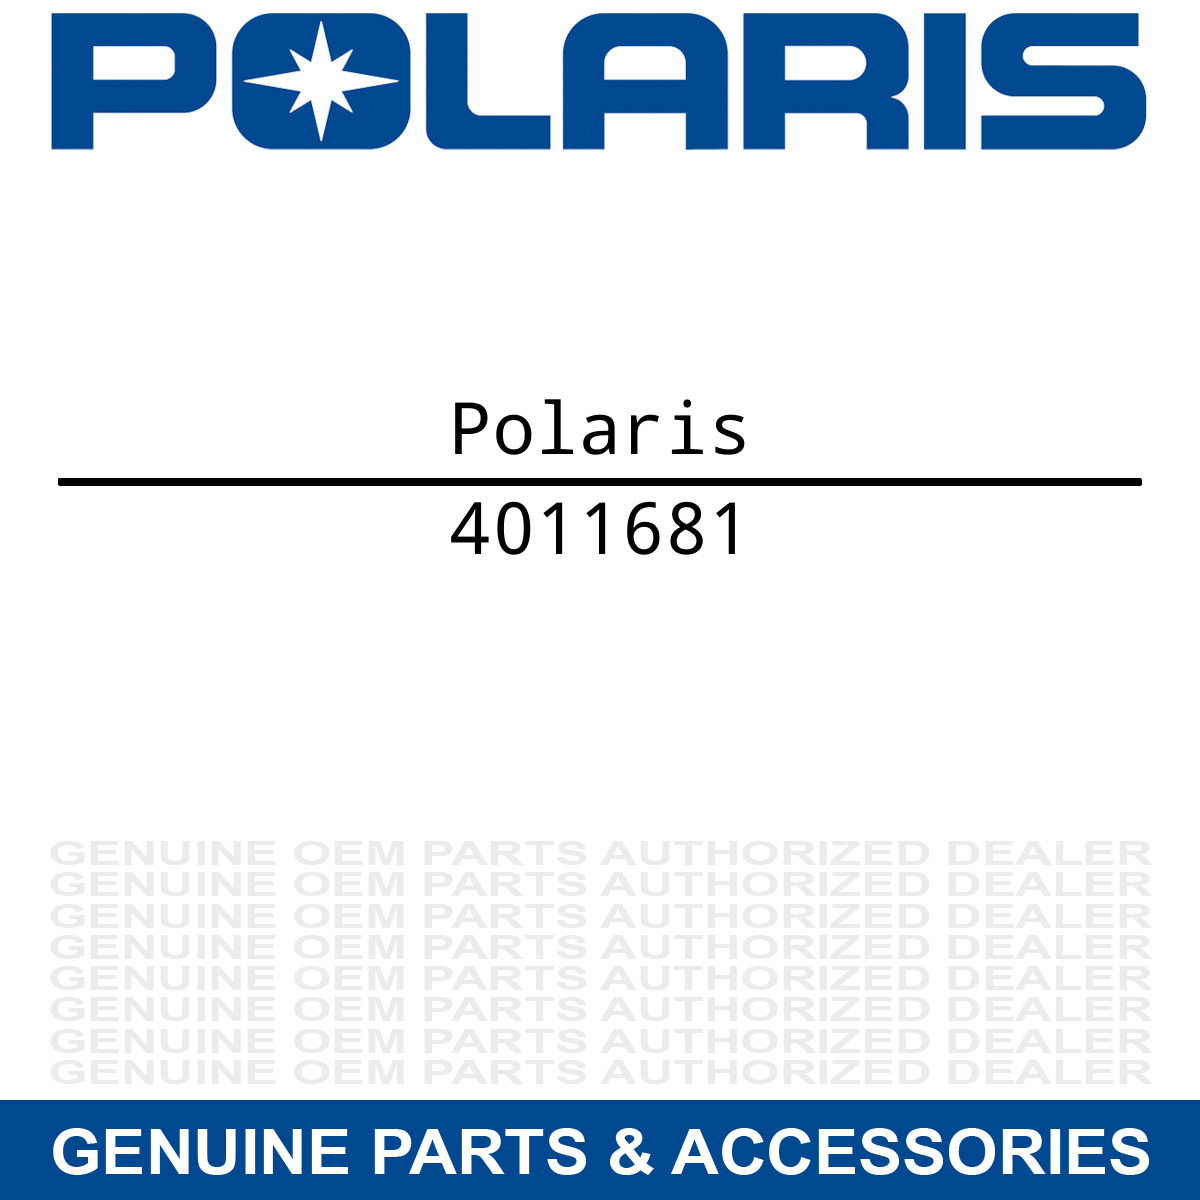 Polaris 4011681 5 Amp Fuse Sportsman 400 500 550 570 700